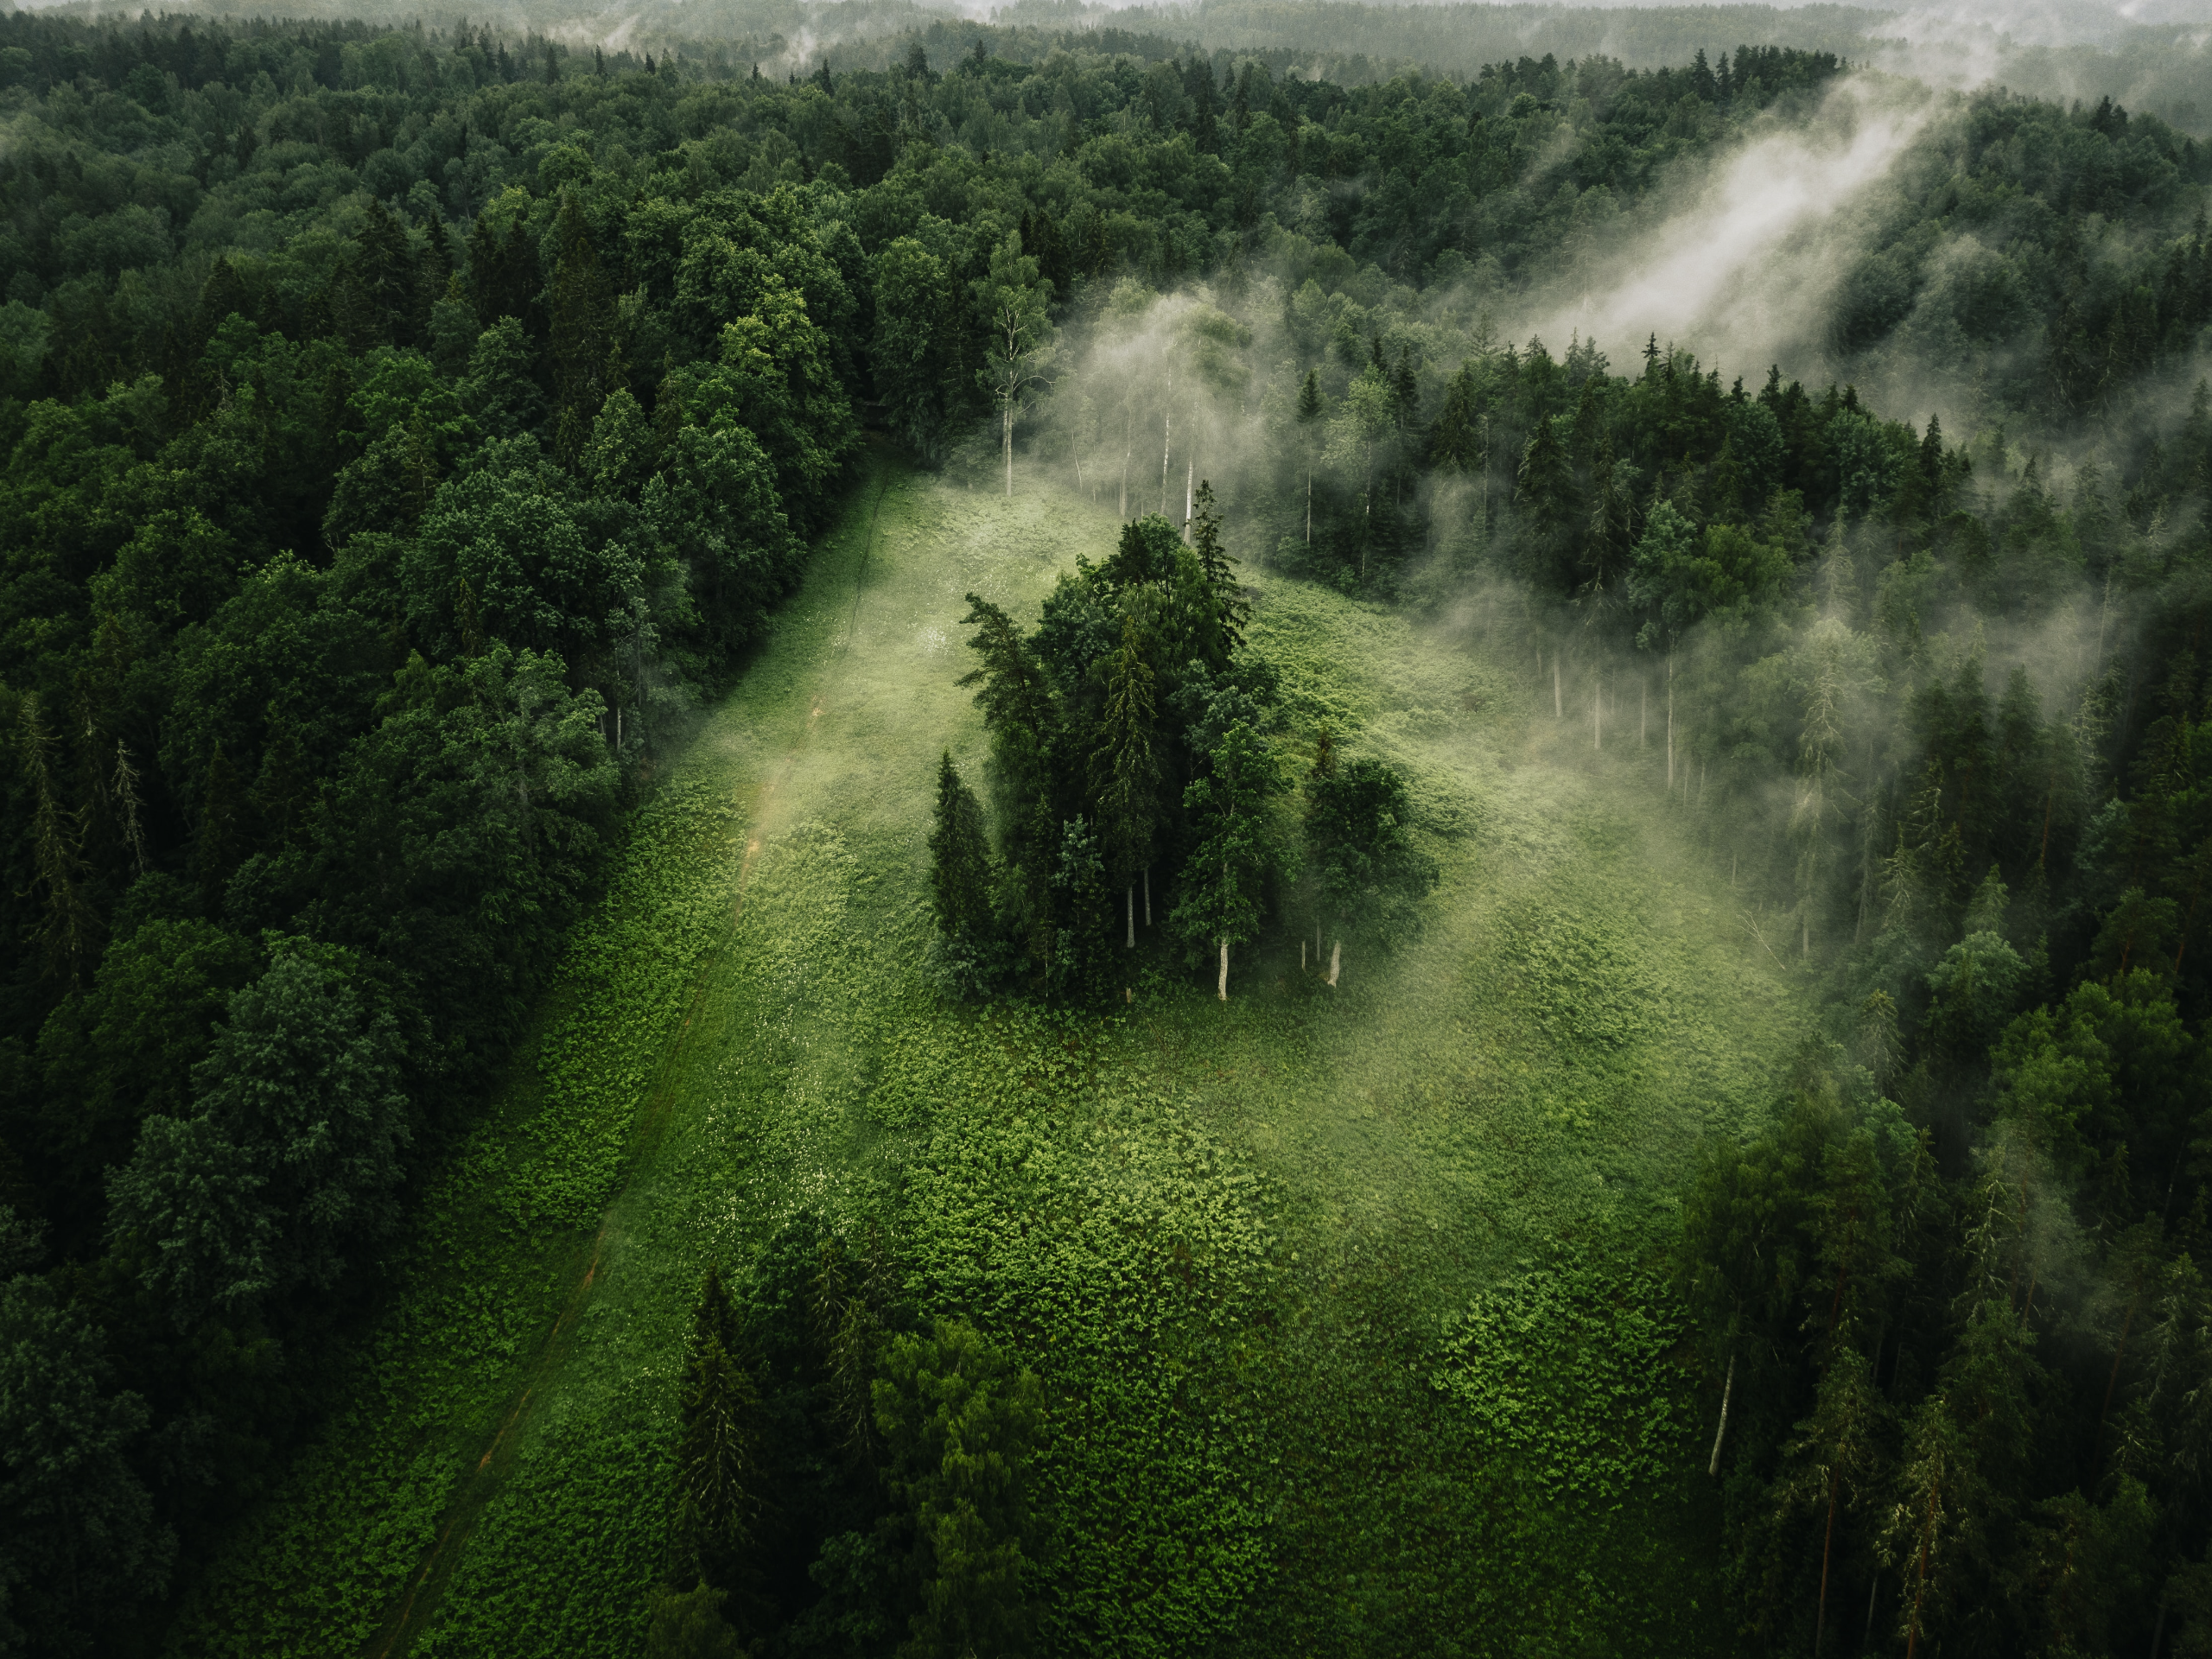 General 2560x1920 nature landscape trees plants grass forest mist green Latvia